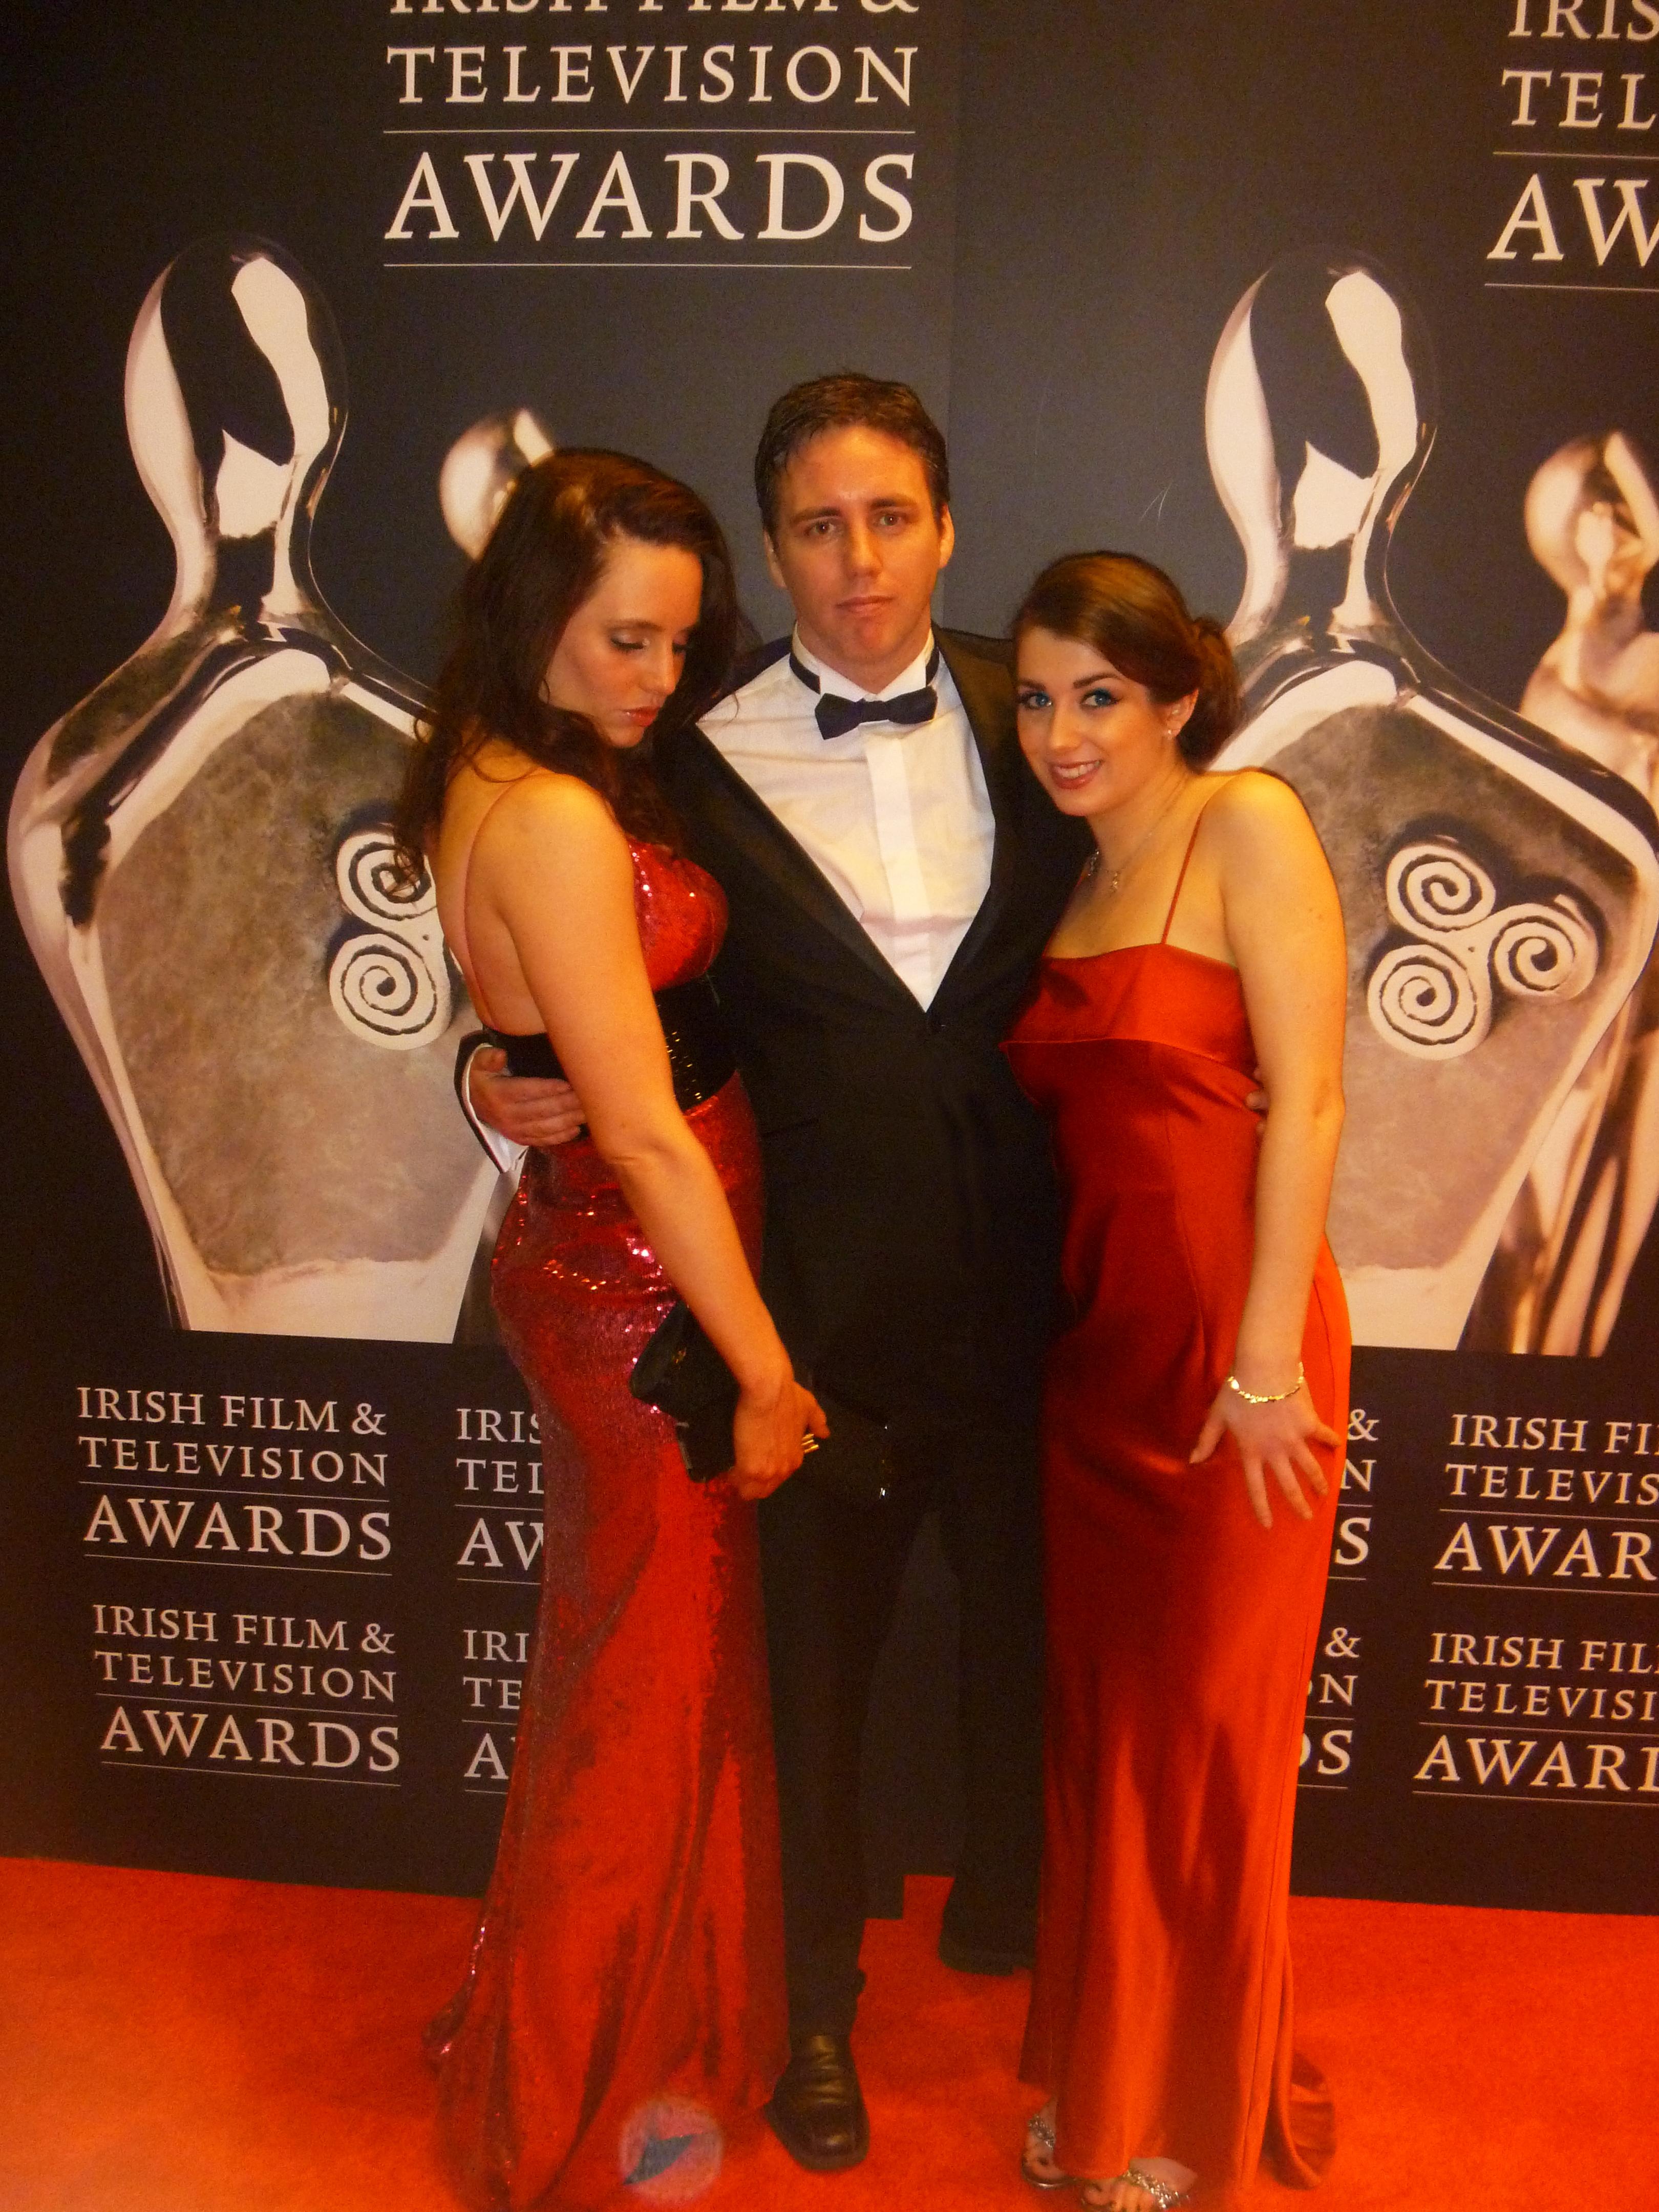 Patrick Murphy at the Irish Film and Television Awards 2012 with Aoibheann McCaul and Carla Mc Glynn.